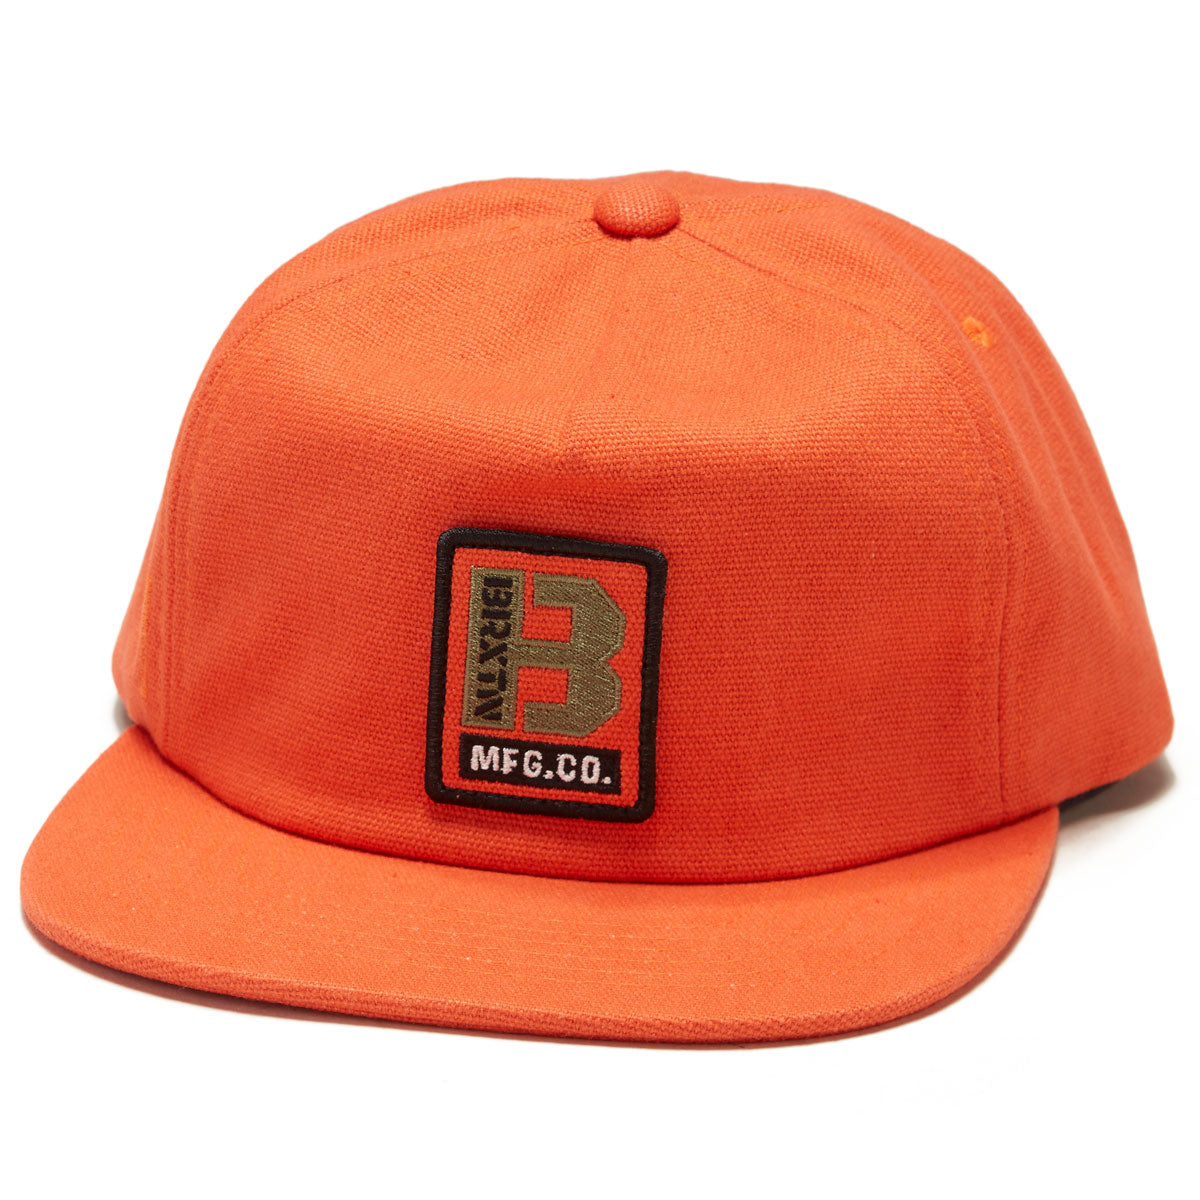 Brixton Builders Mp Adjustable Hat - Orange image 1